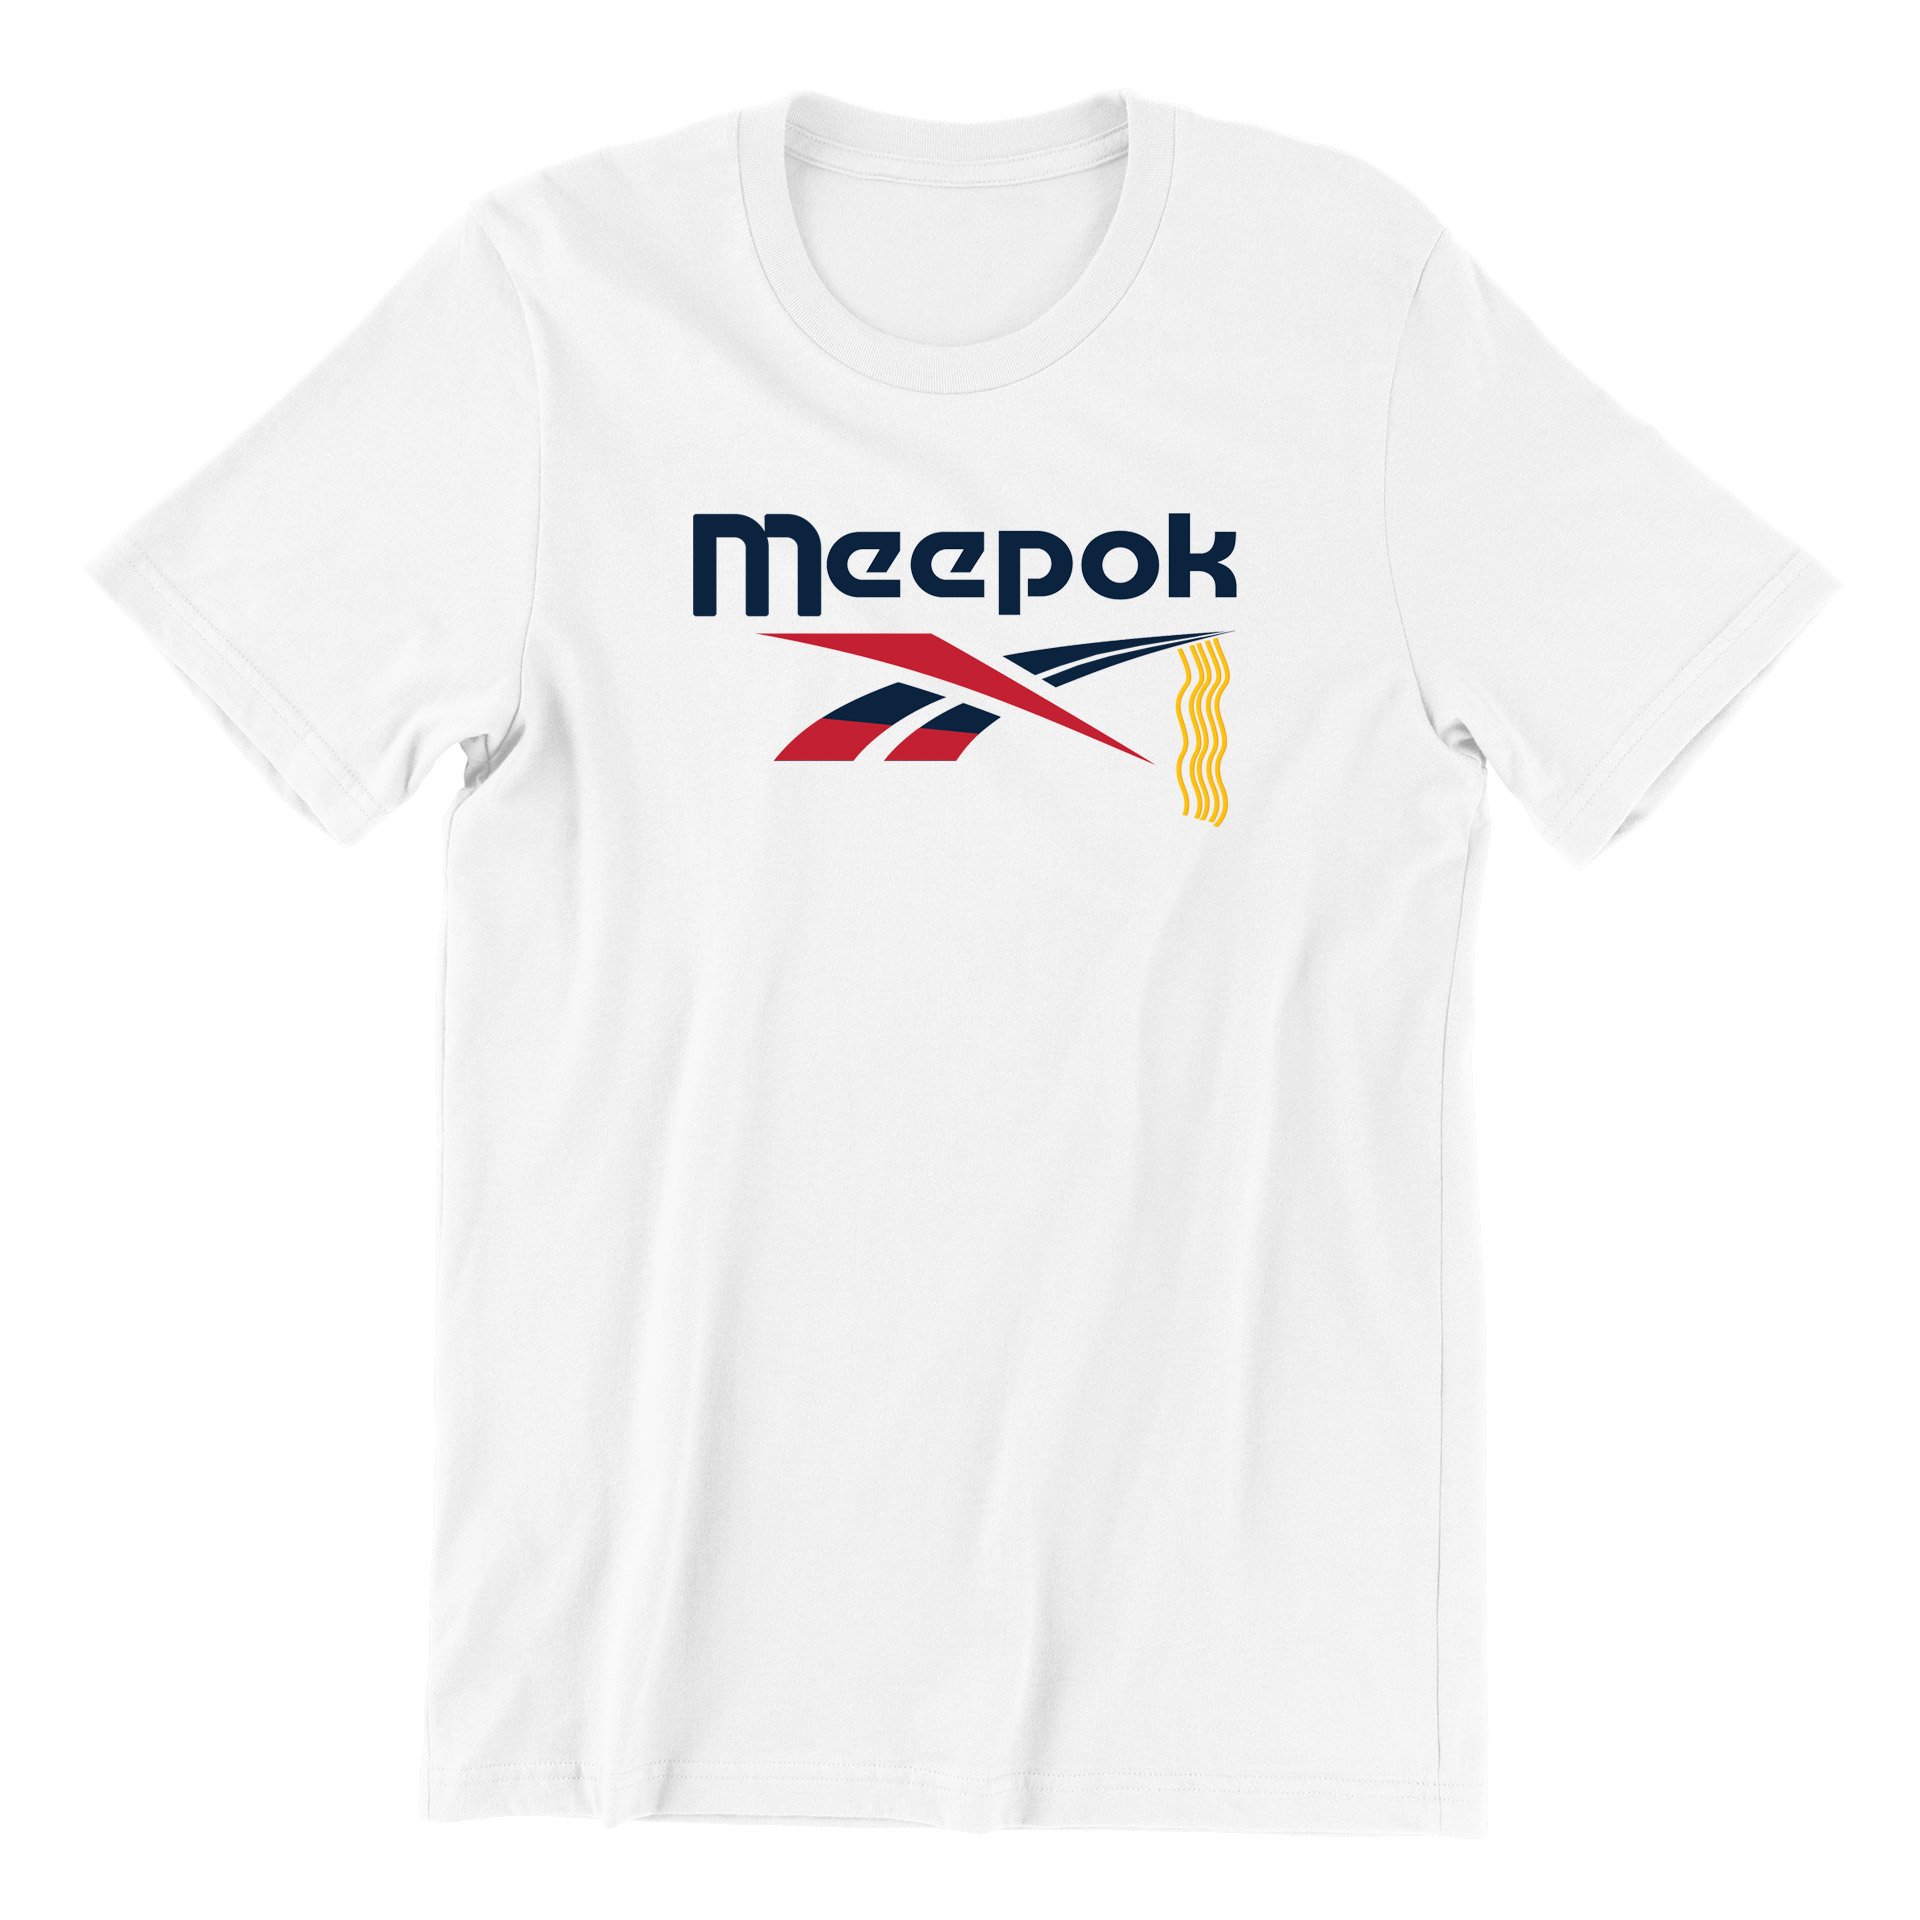 Mee Pok Meepok Short Sleeve T-shirt